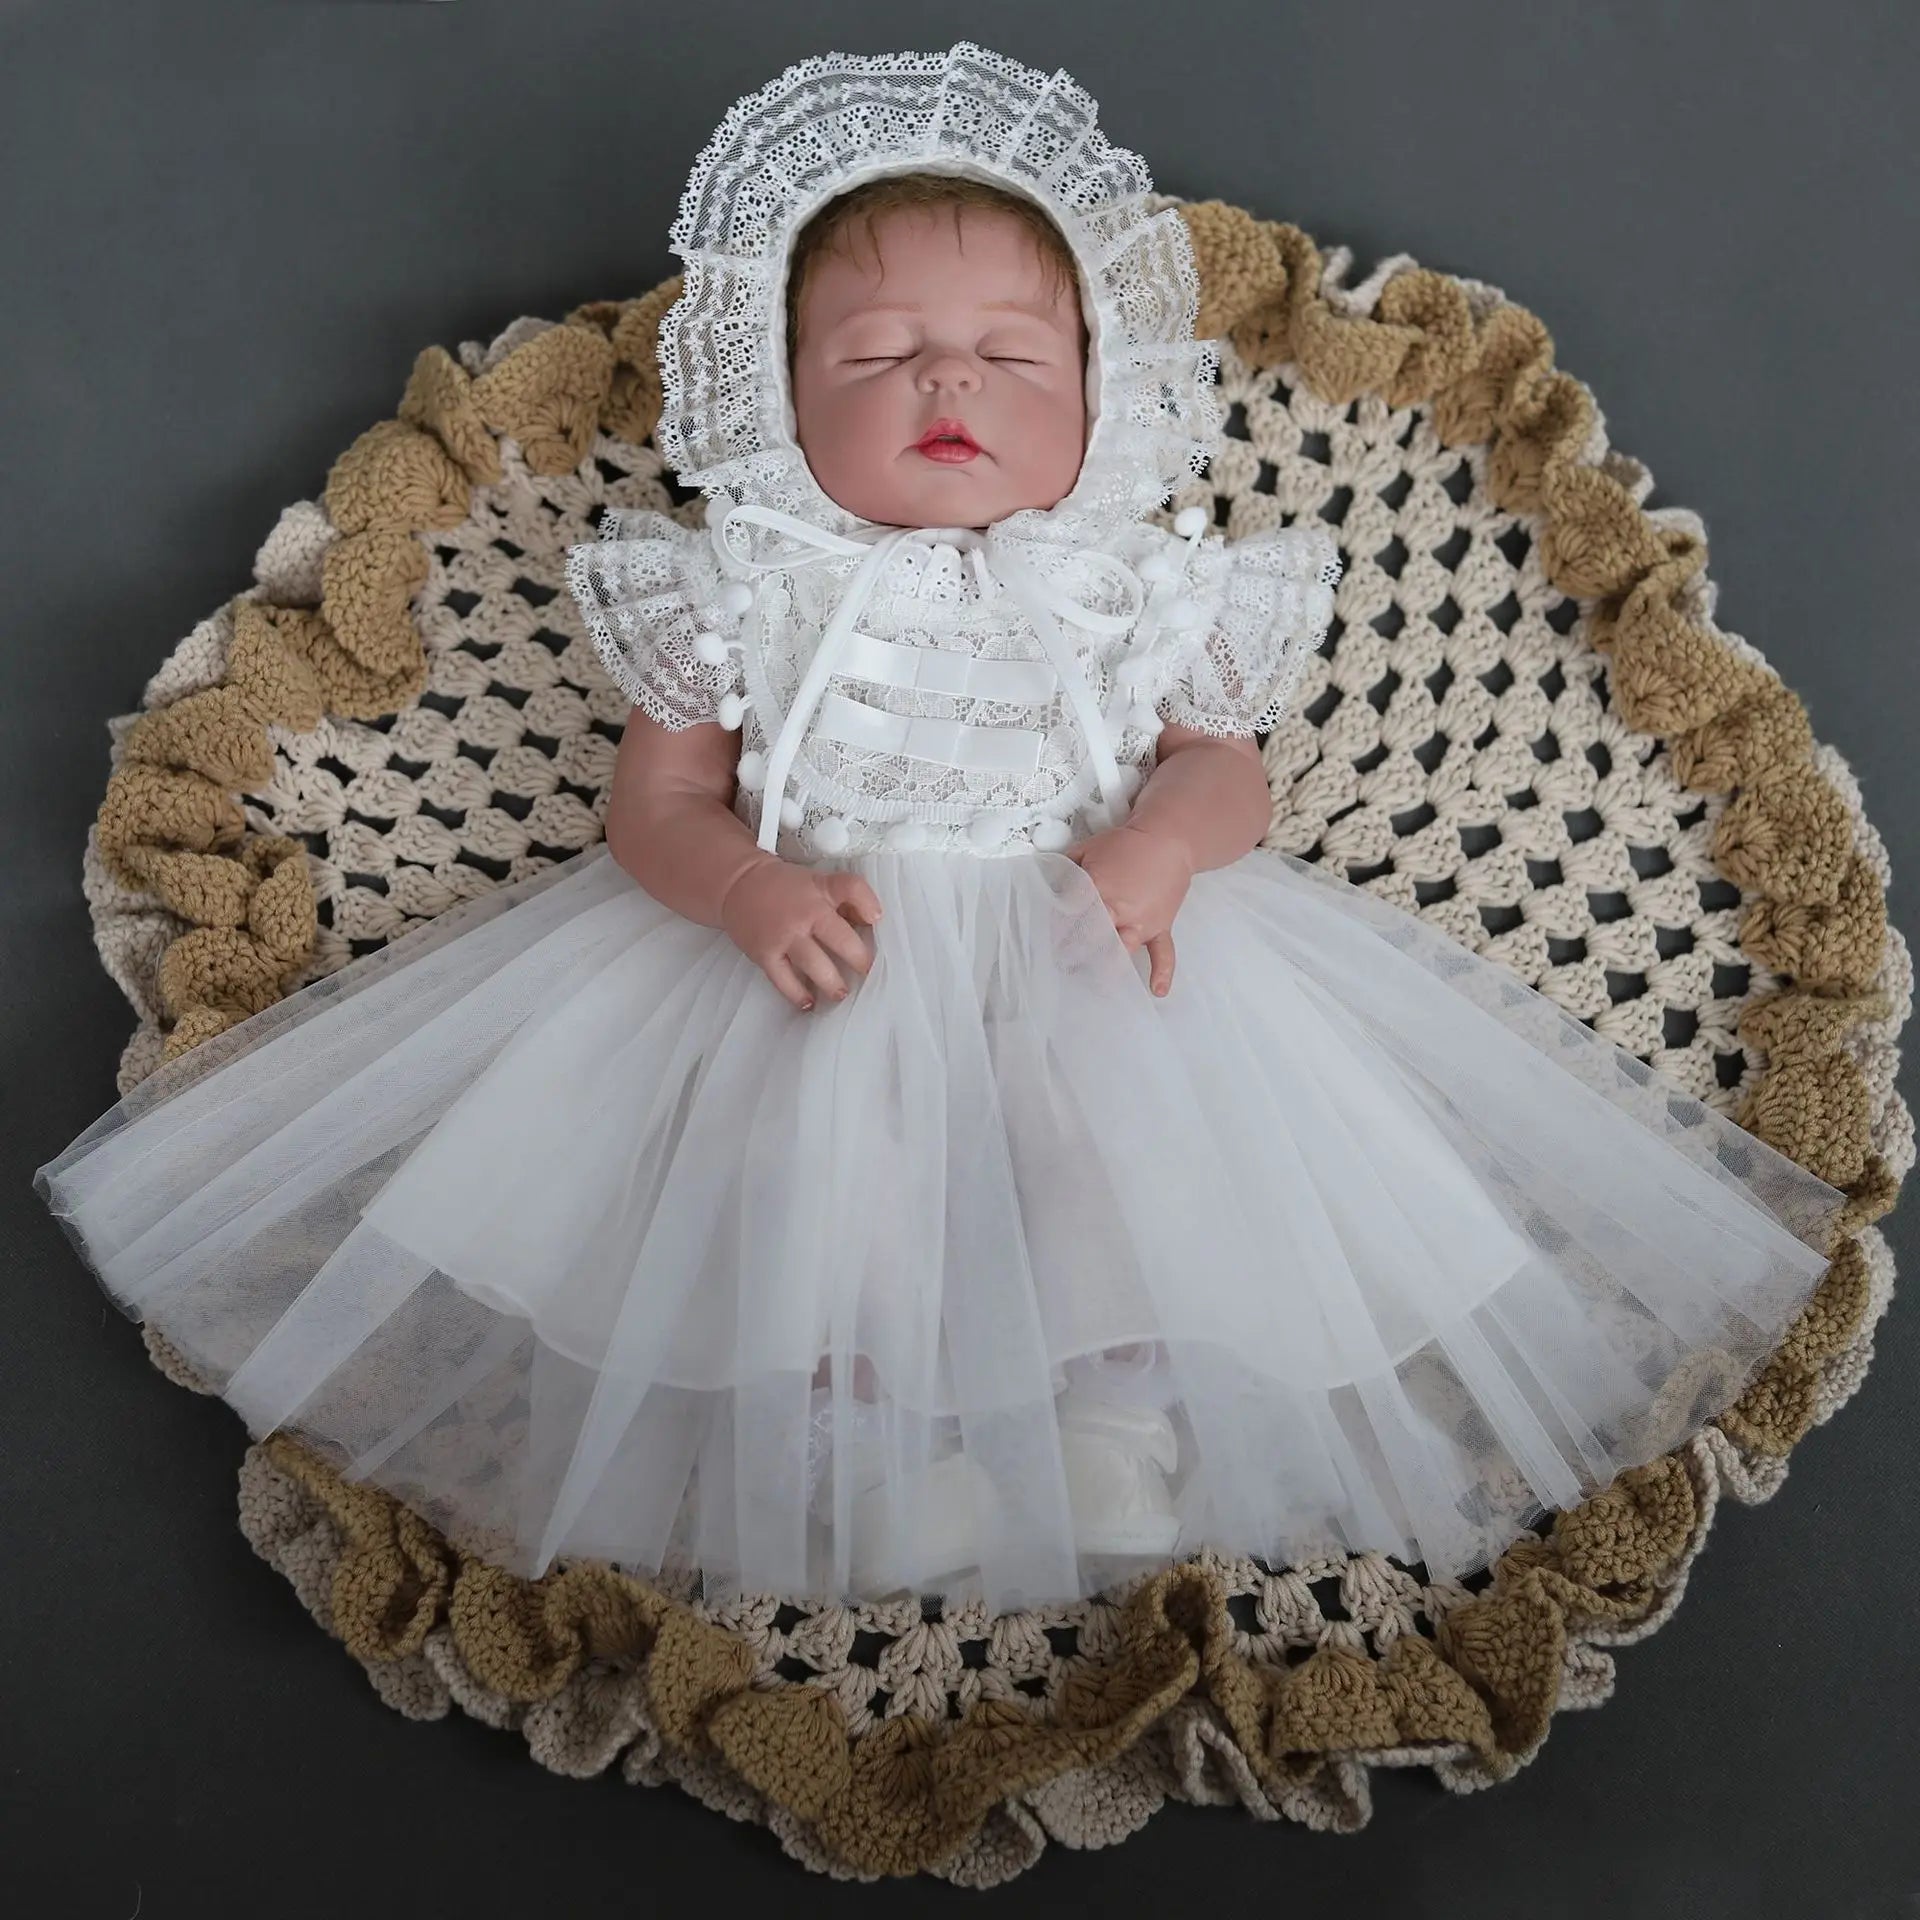 Ivory Toddler Baptism Dress 0-24M For Baby Girl White Short Sleeves by Baby Minaj Cruz